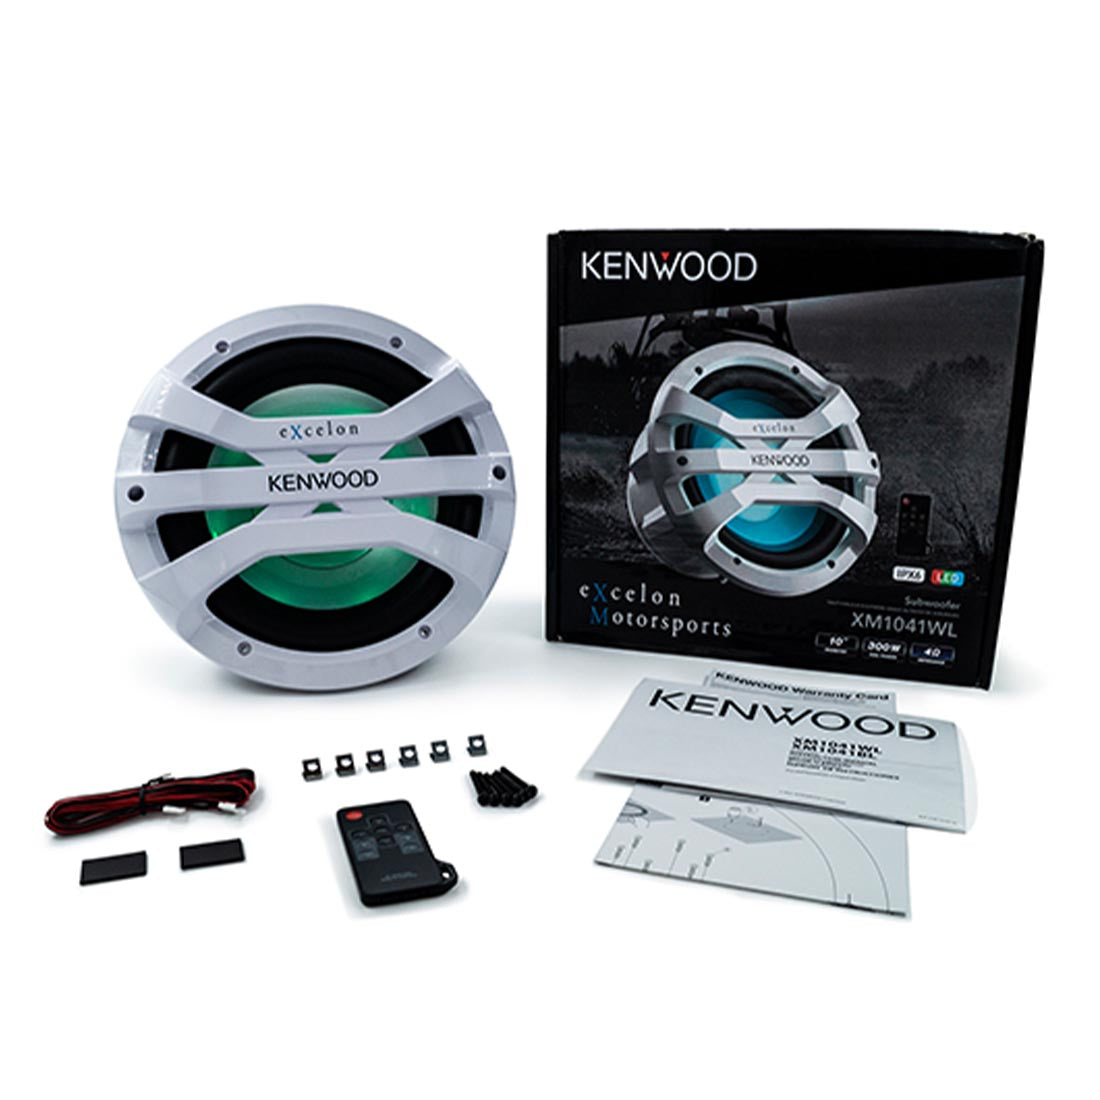 Kenwood XM1041WL All